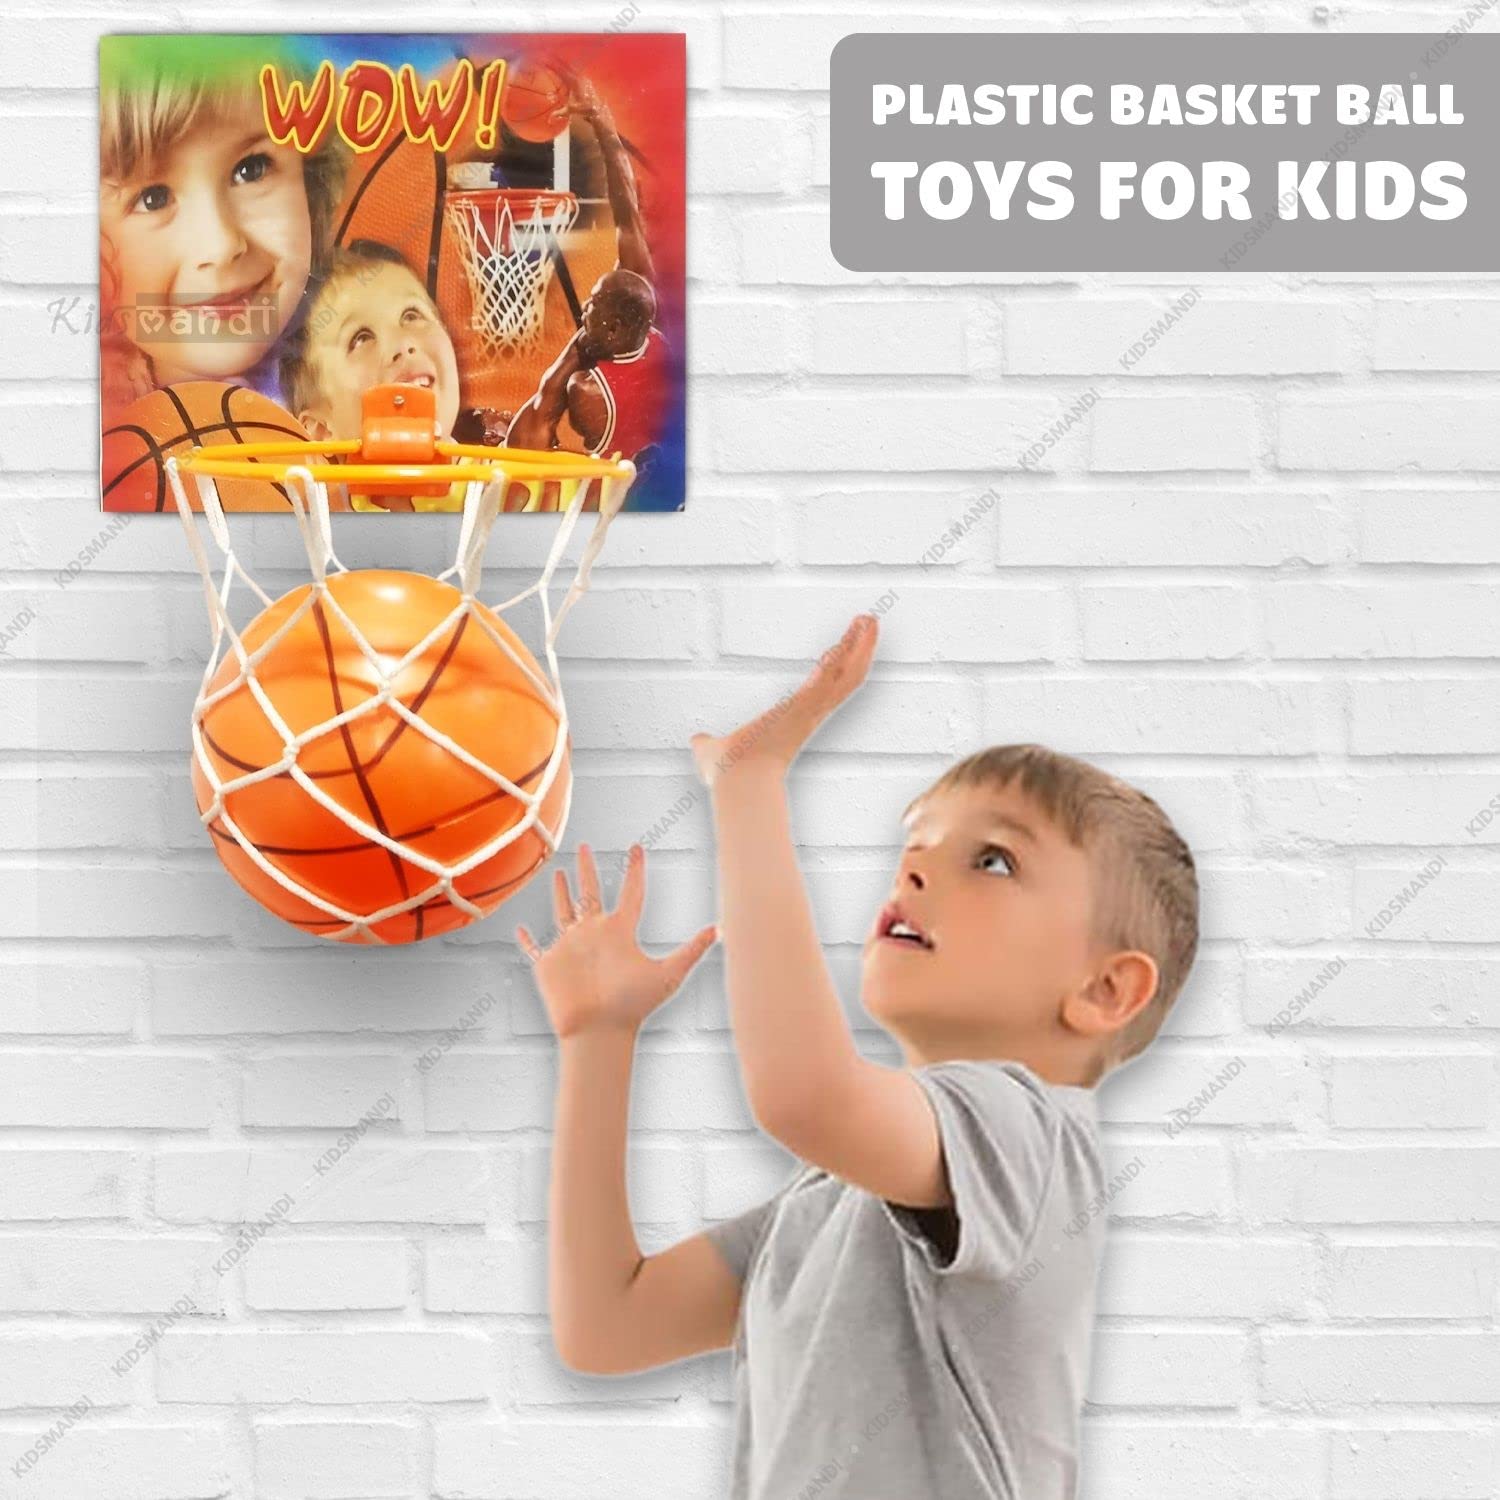 Kids Mandi Plastic Basketball Toys for Kids, Portable Basketball Set